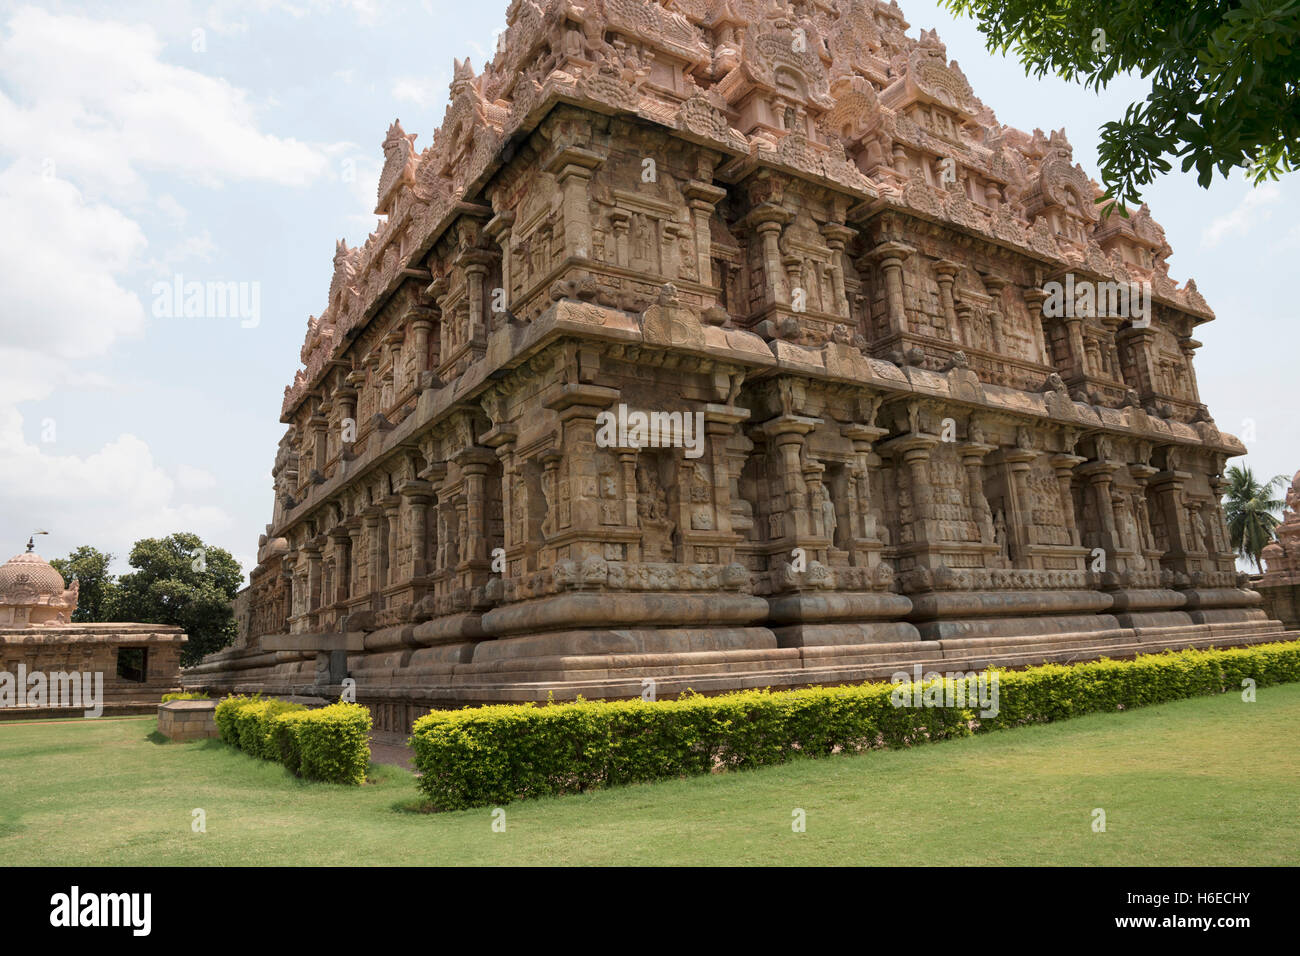 Temple de Brihadisvara, Gangaikondacholapuram, Tamil Nadu, Inde. Vue depuis le nord-ouest. Banque D'Images